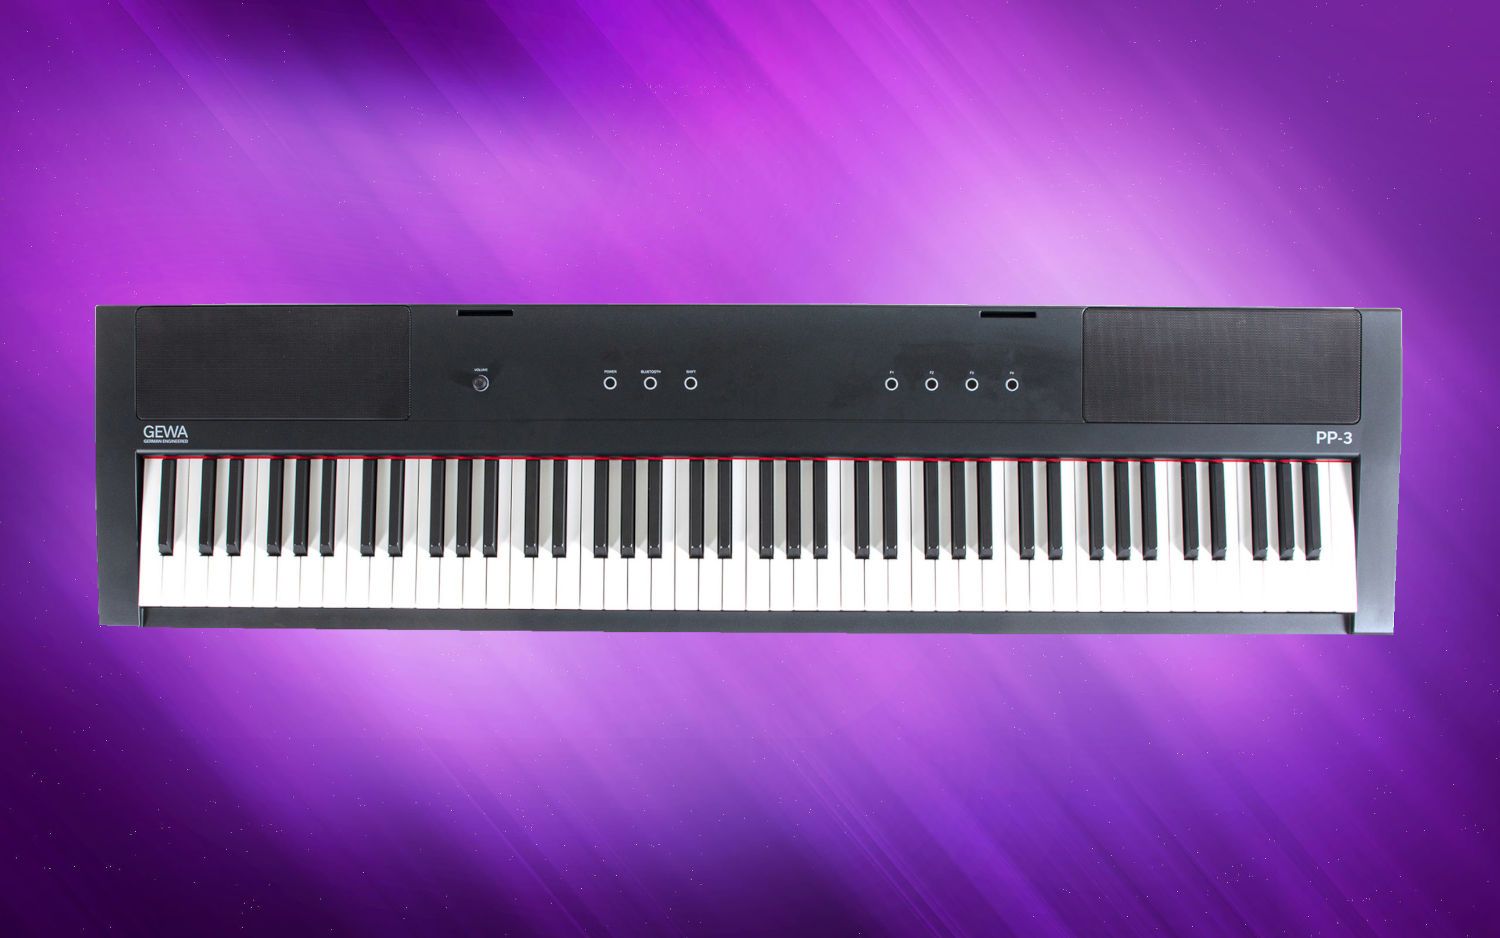 Новинка от производителя GEWA портативное цифровое фортепиано PP-3